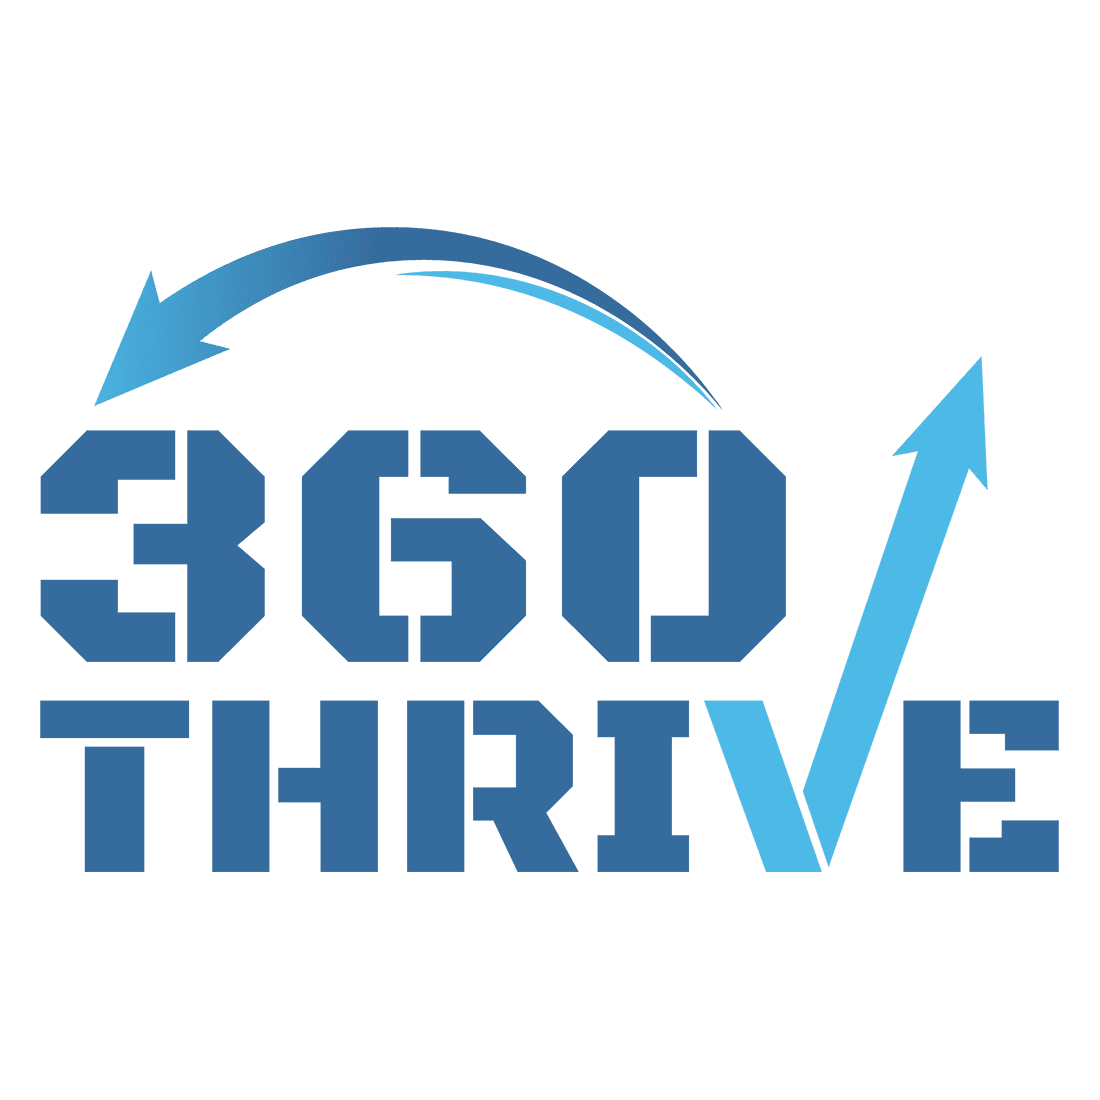 Karam Alraei (CEO of 360 Thrive)